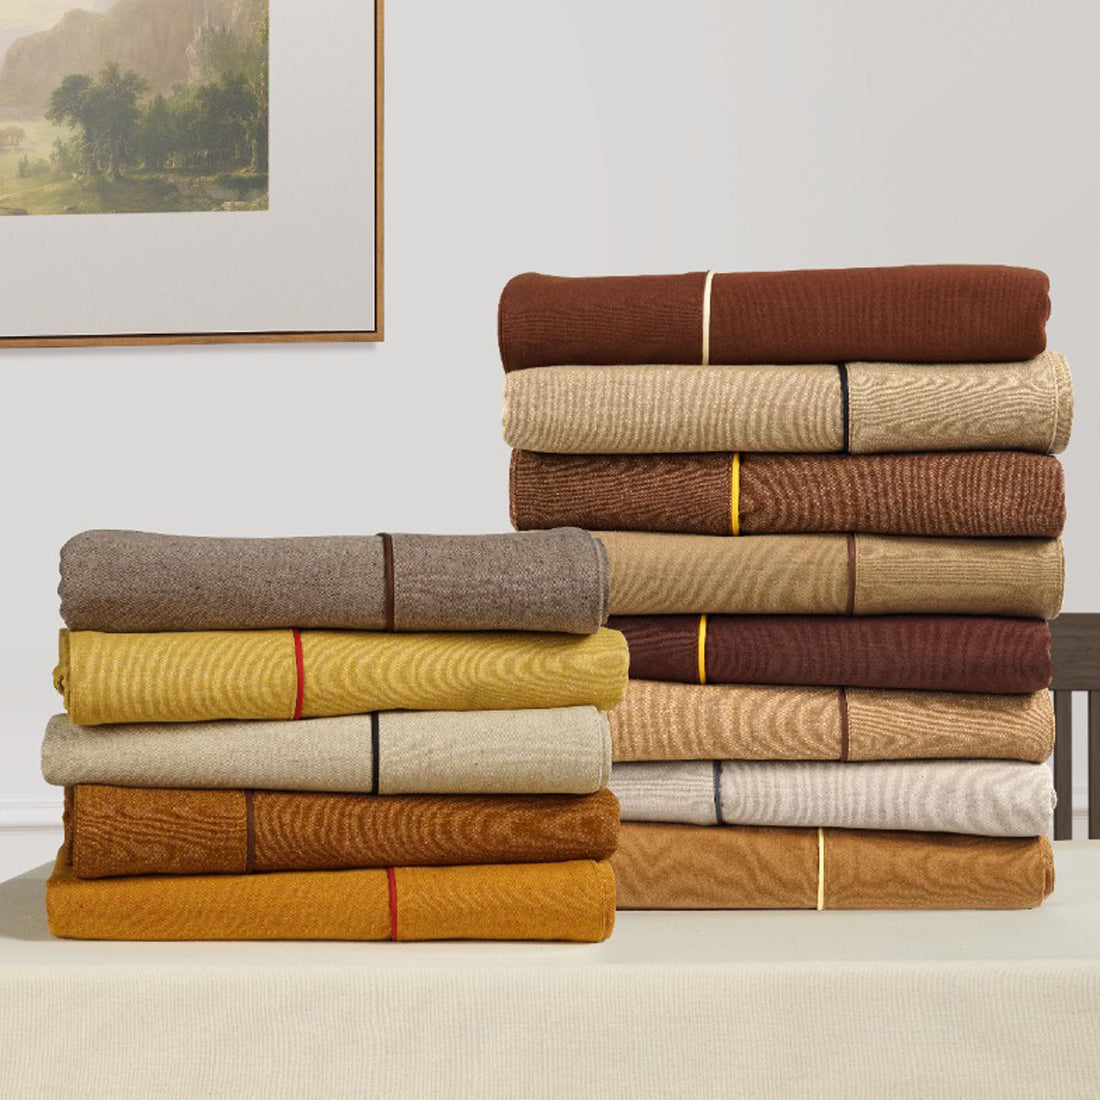 VIRGO Woven Cotton Plain Table Cover - Khaki